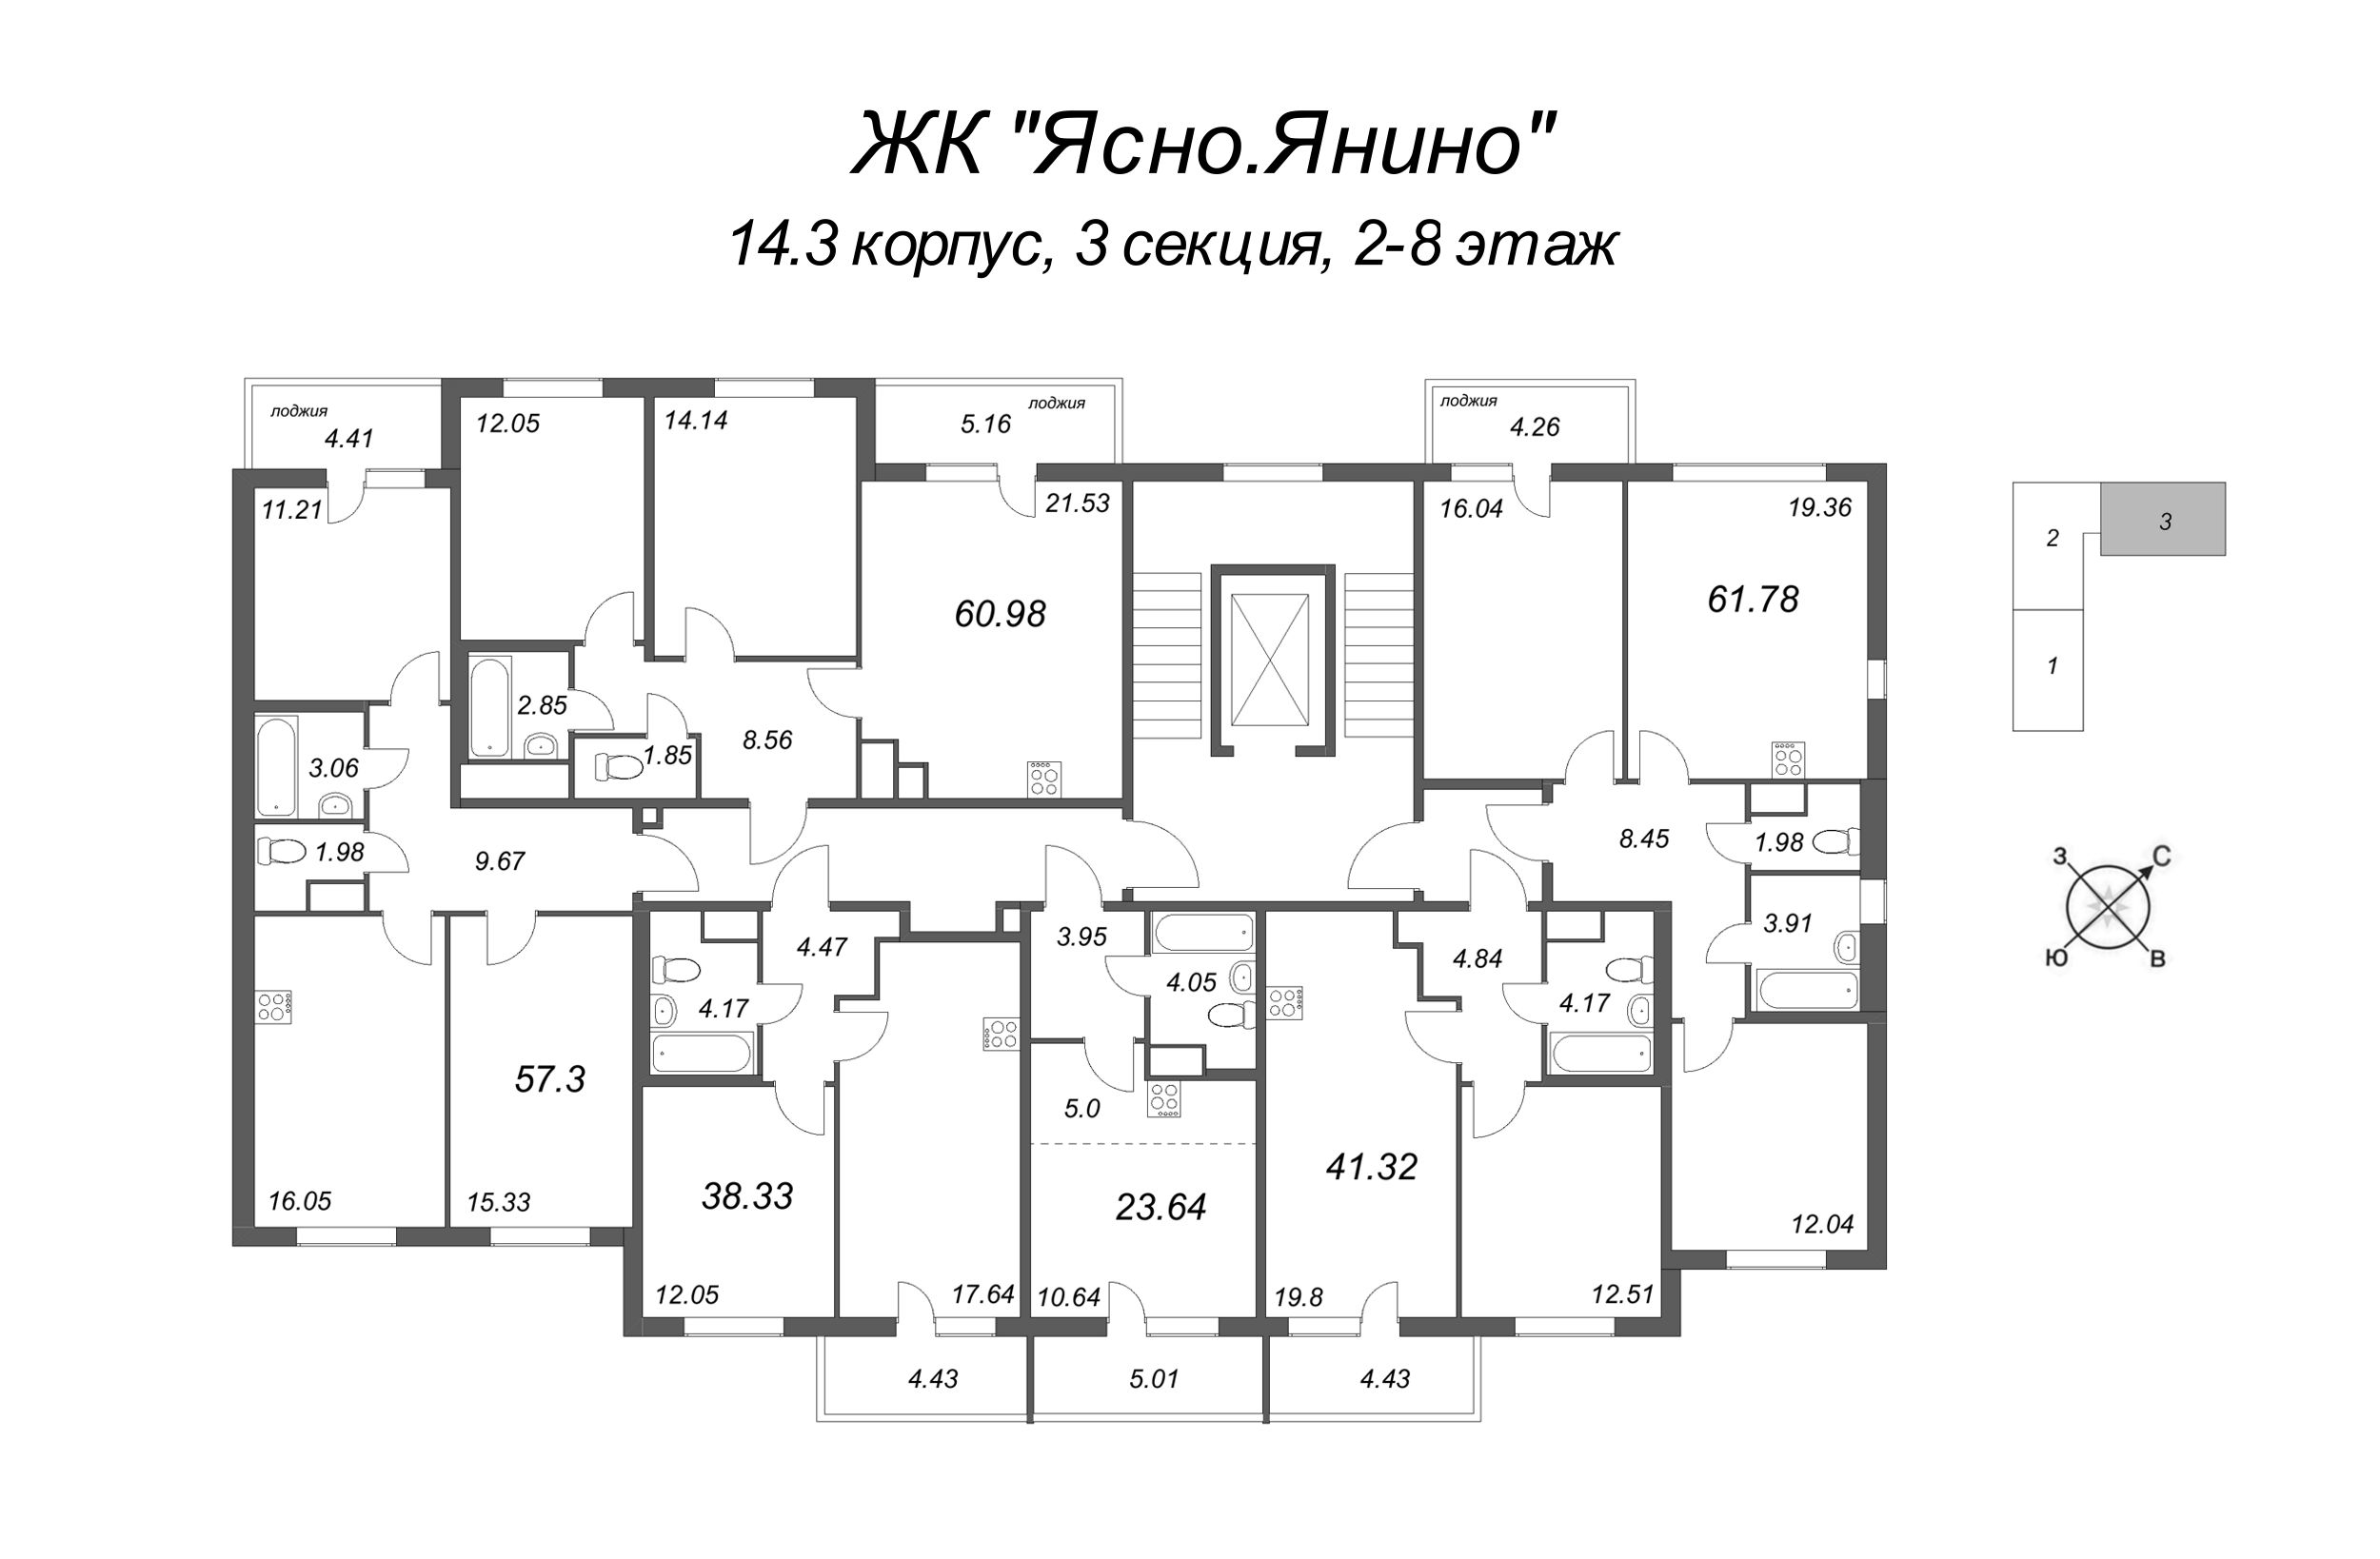 3-комнатная (Евро) квартира, 61.78 м² в ЖК "Ясно.Янино" - планировка этажа